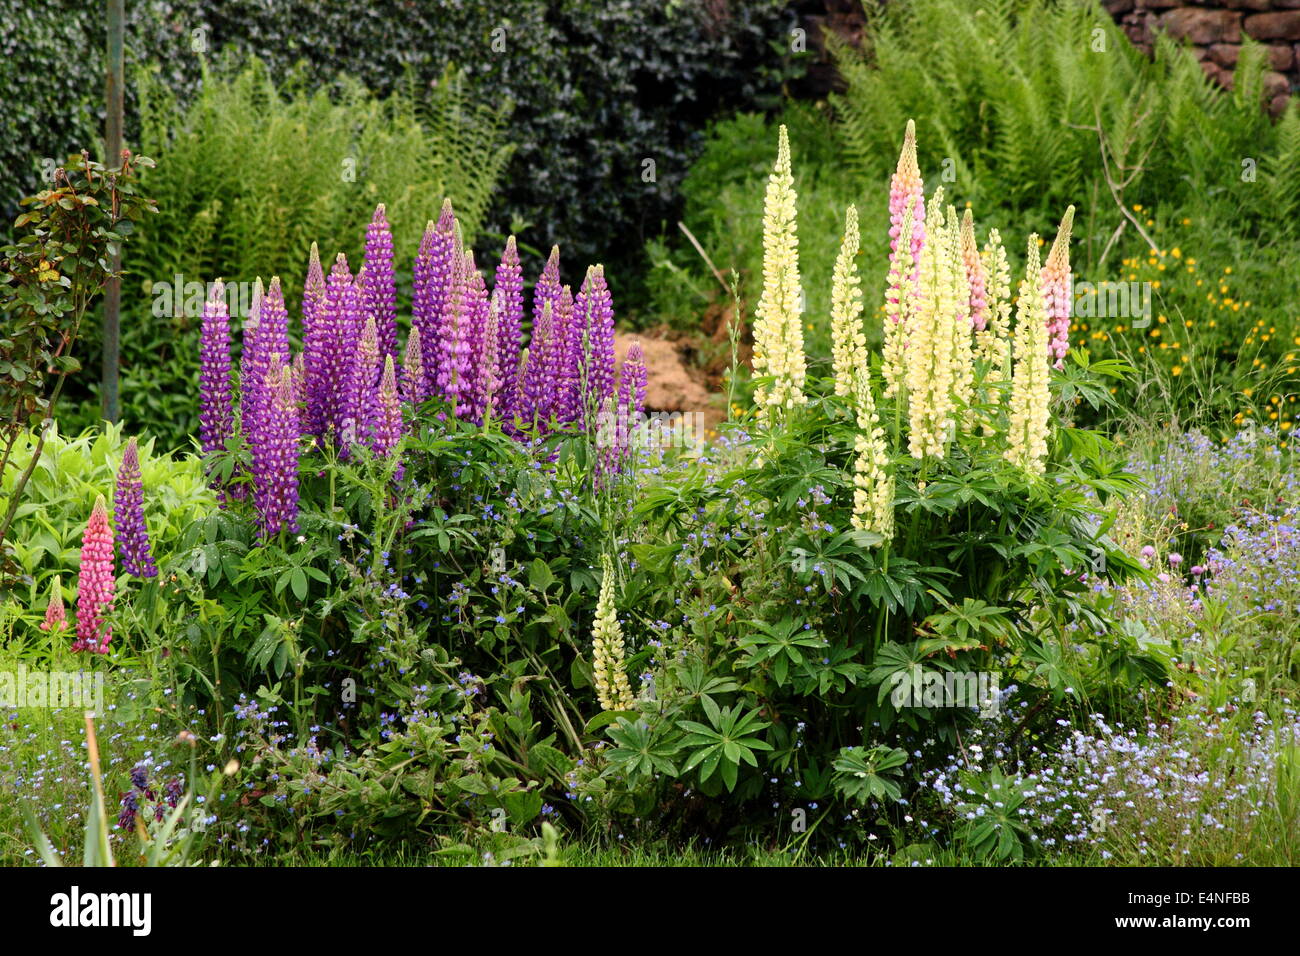 Lu[inus. Lupins flowering in a summer garden border. UK Stock Photo